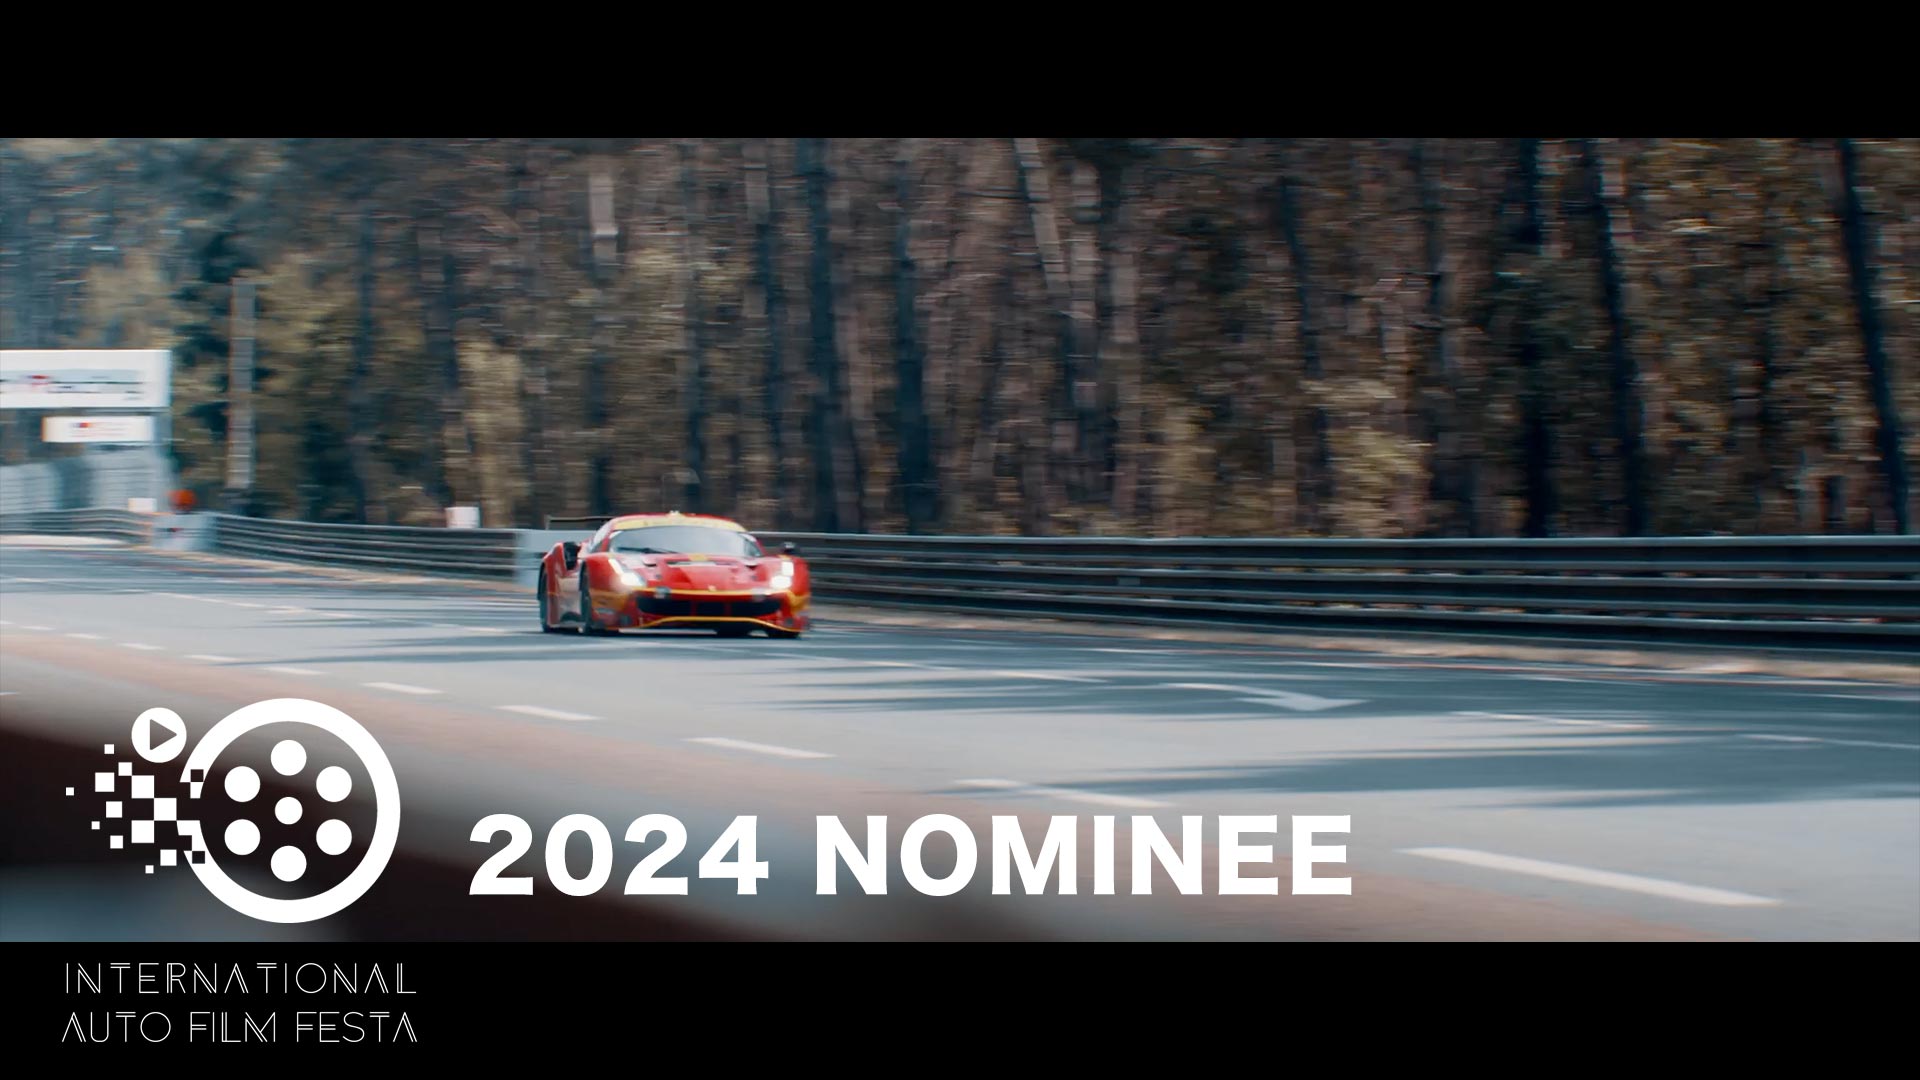 Team 21 / Le Mans 2023 [ 2024 / NOMINEE ]